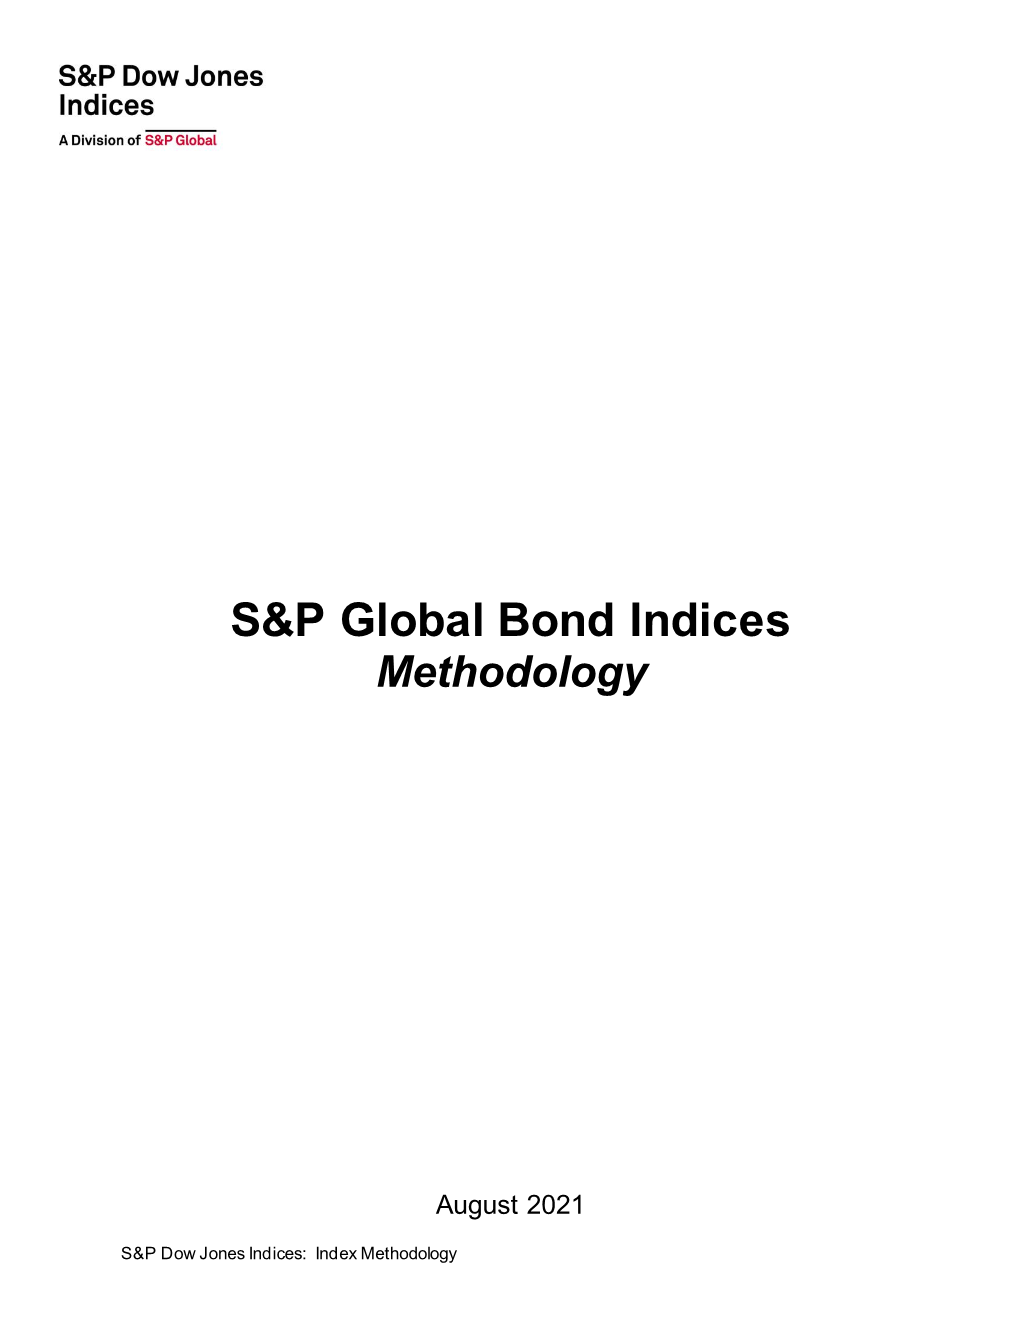 S&P Global Bond Indices Methodology